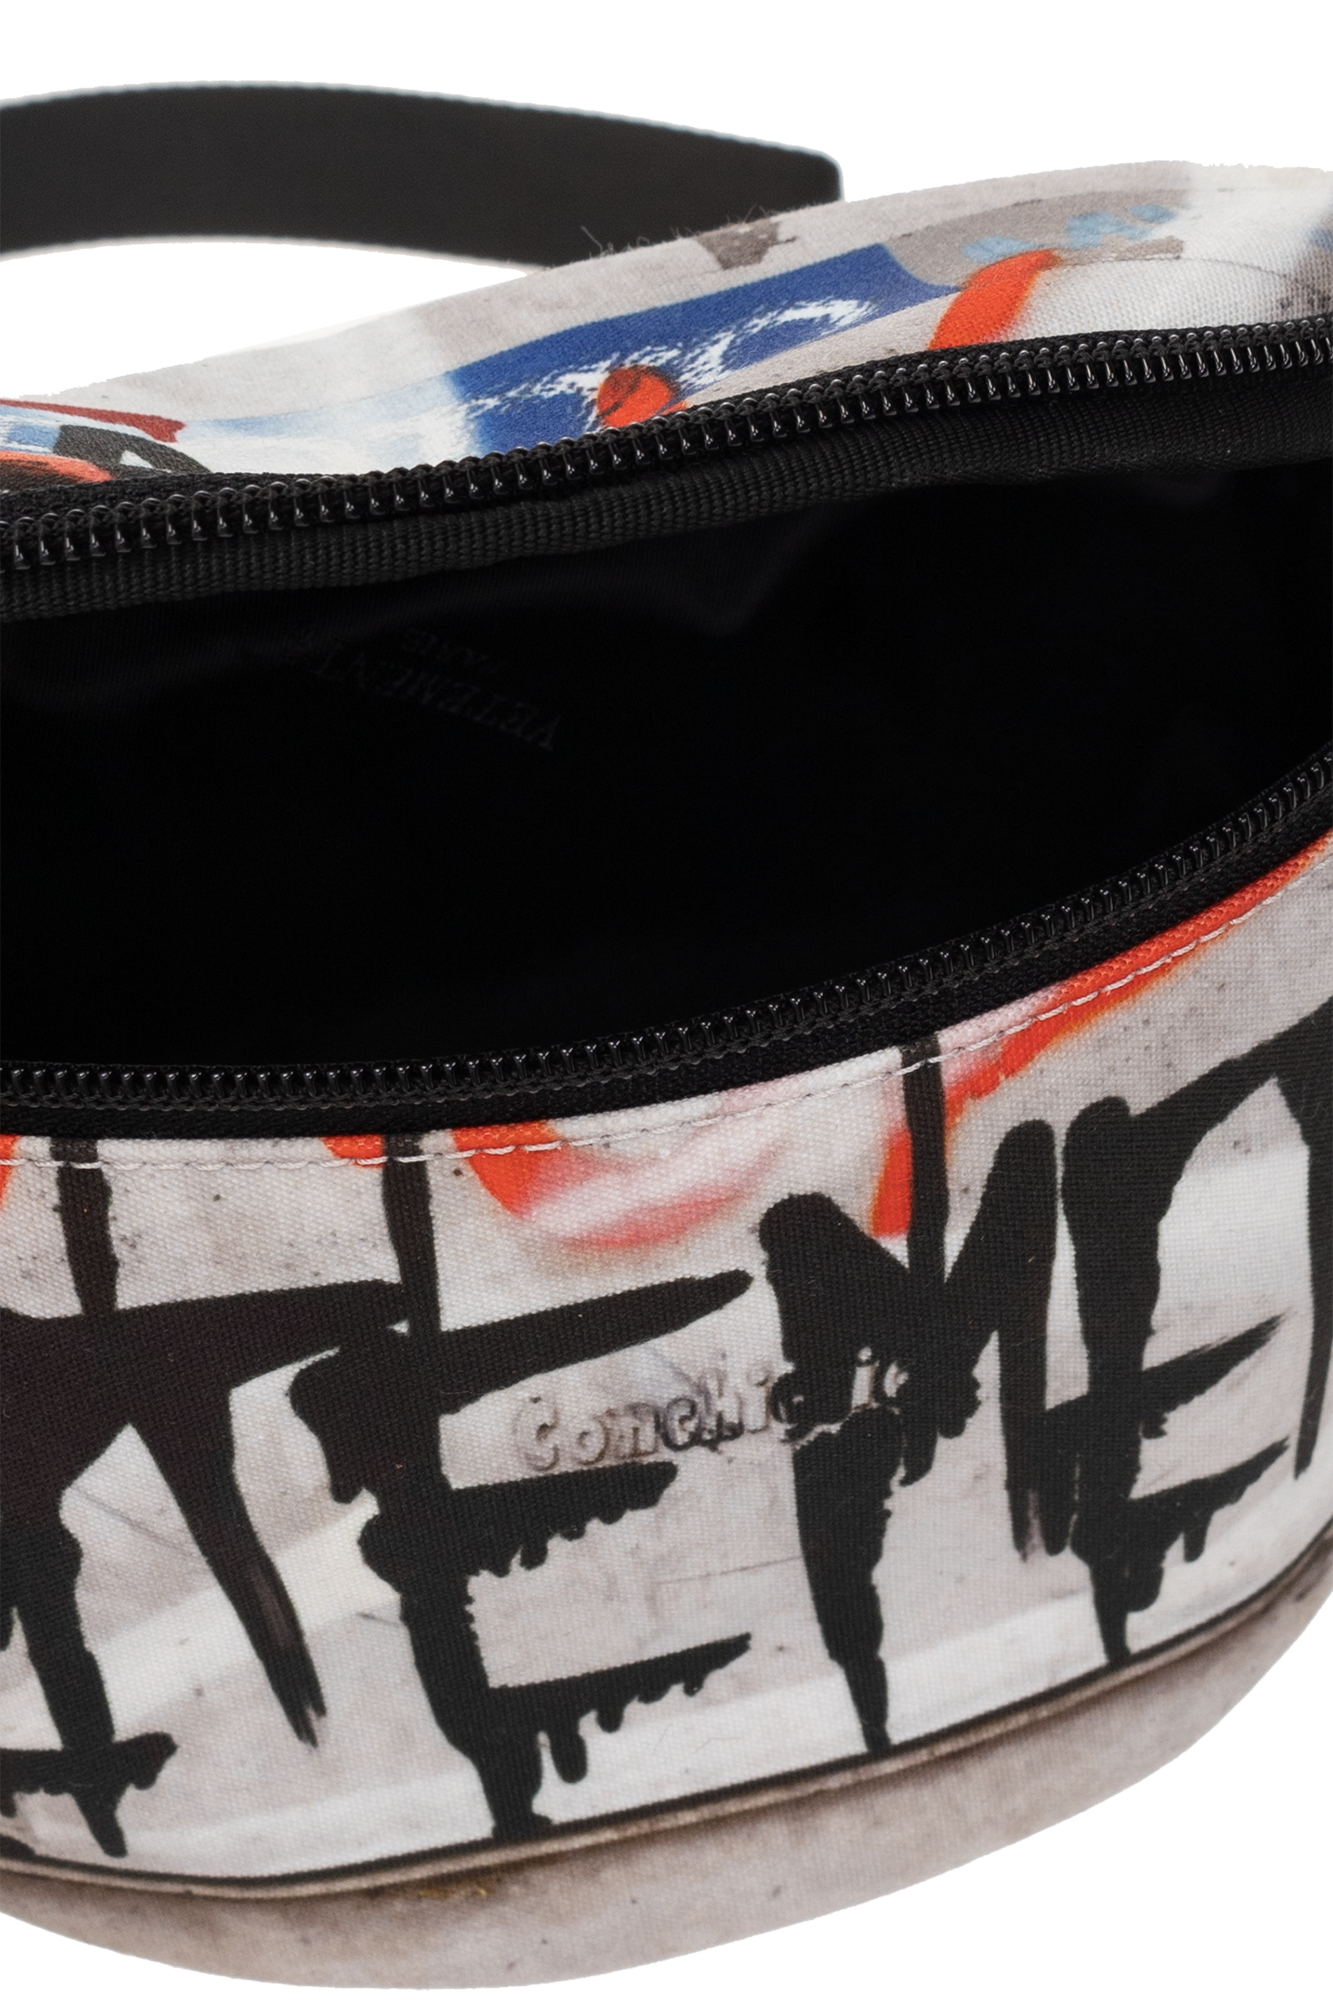 VETEMENTS ‘Graffiti’ belt quilted bag